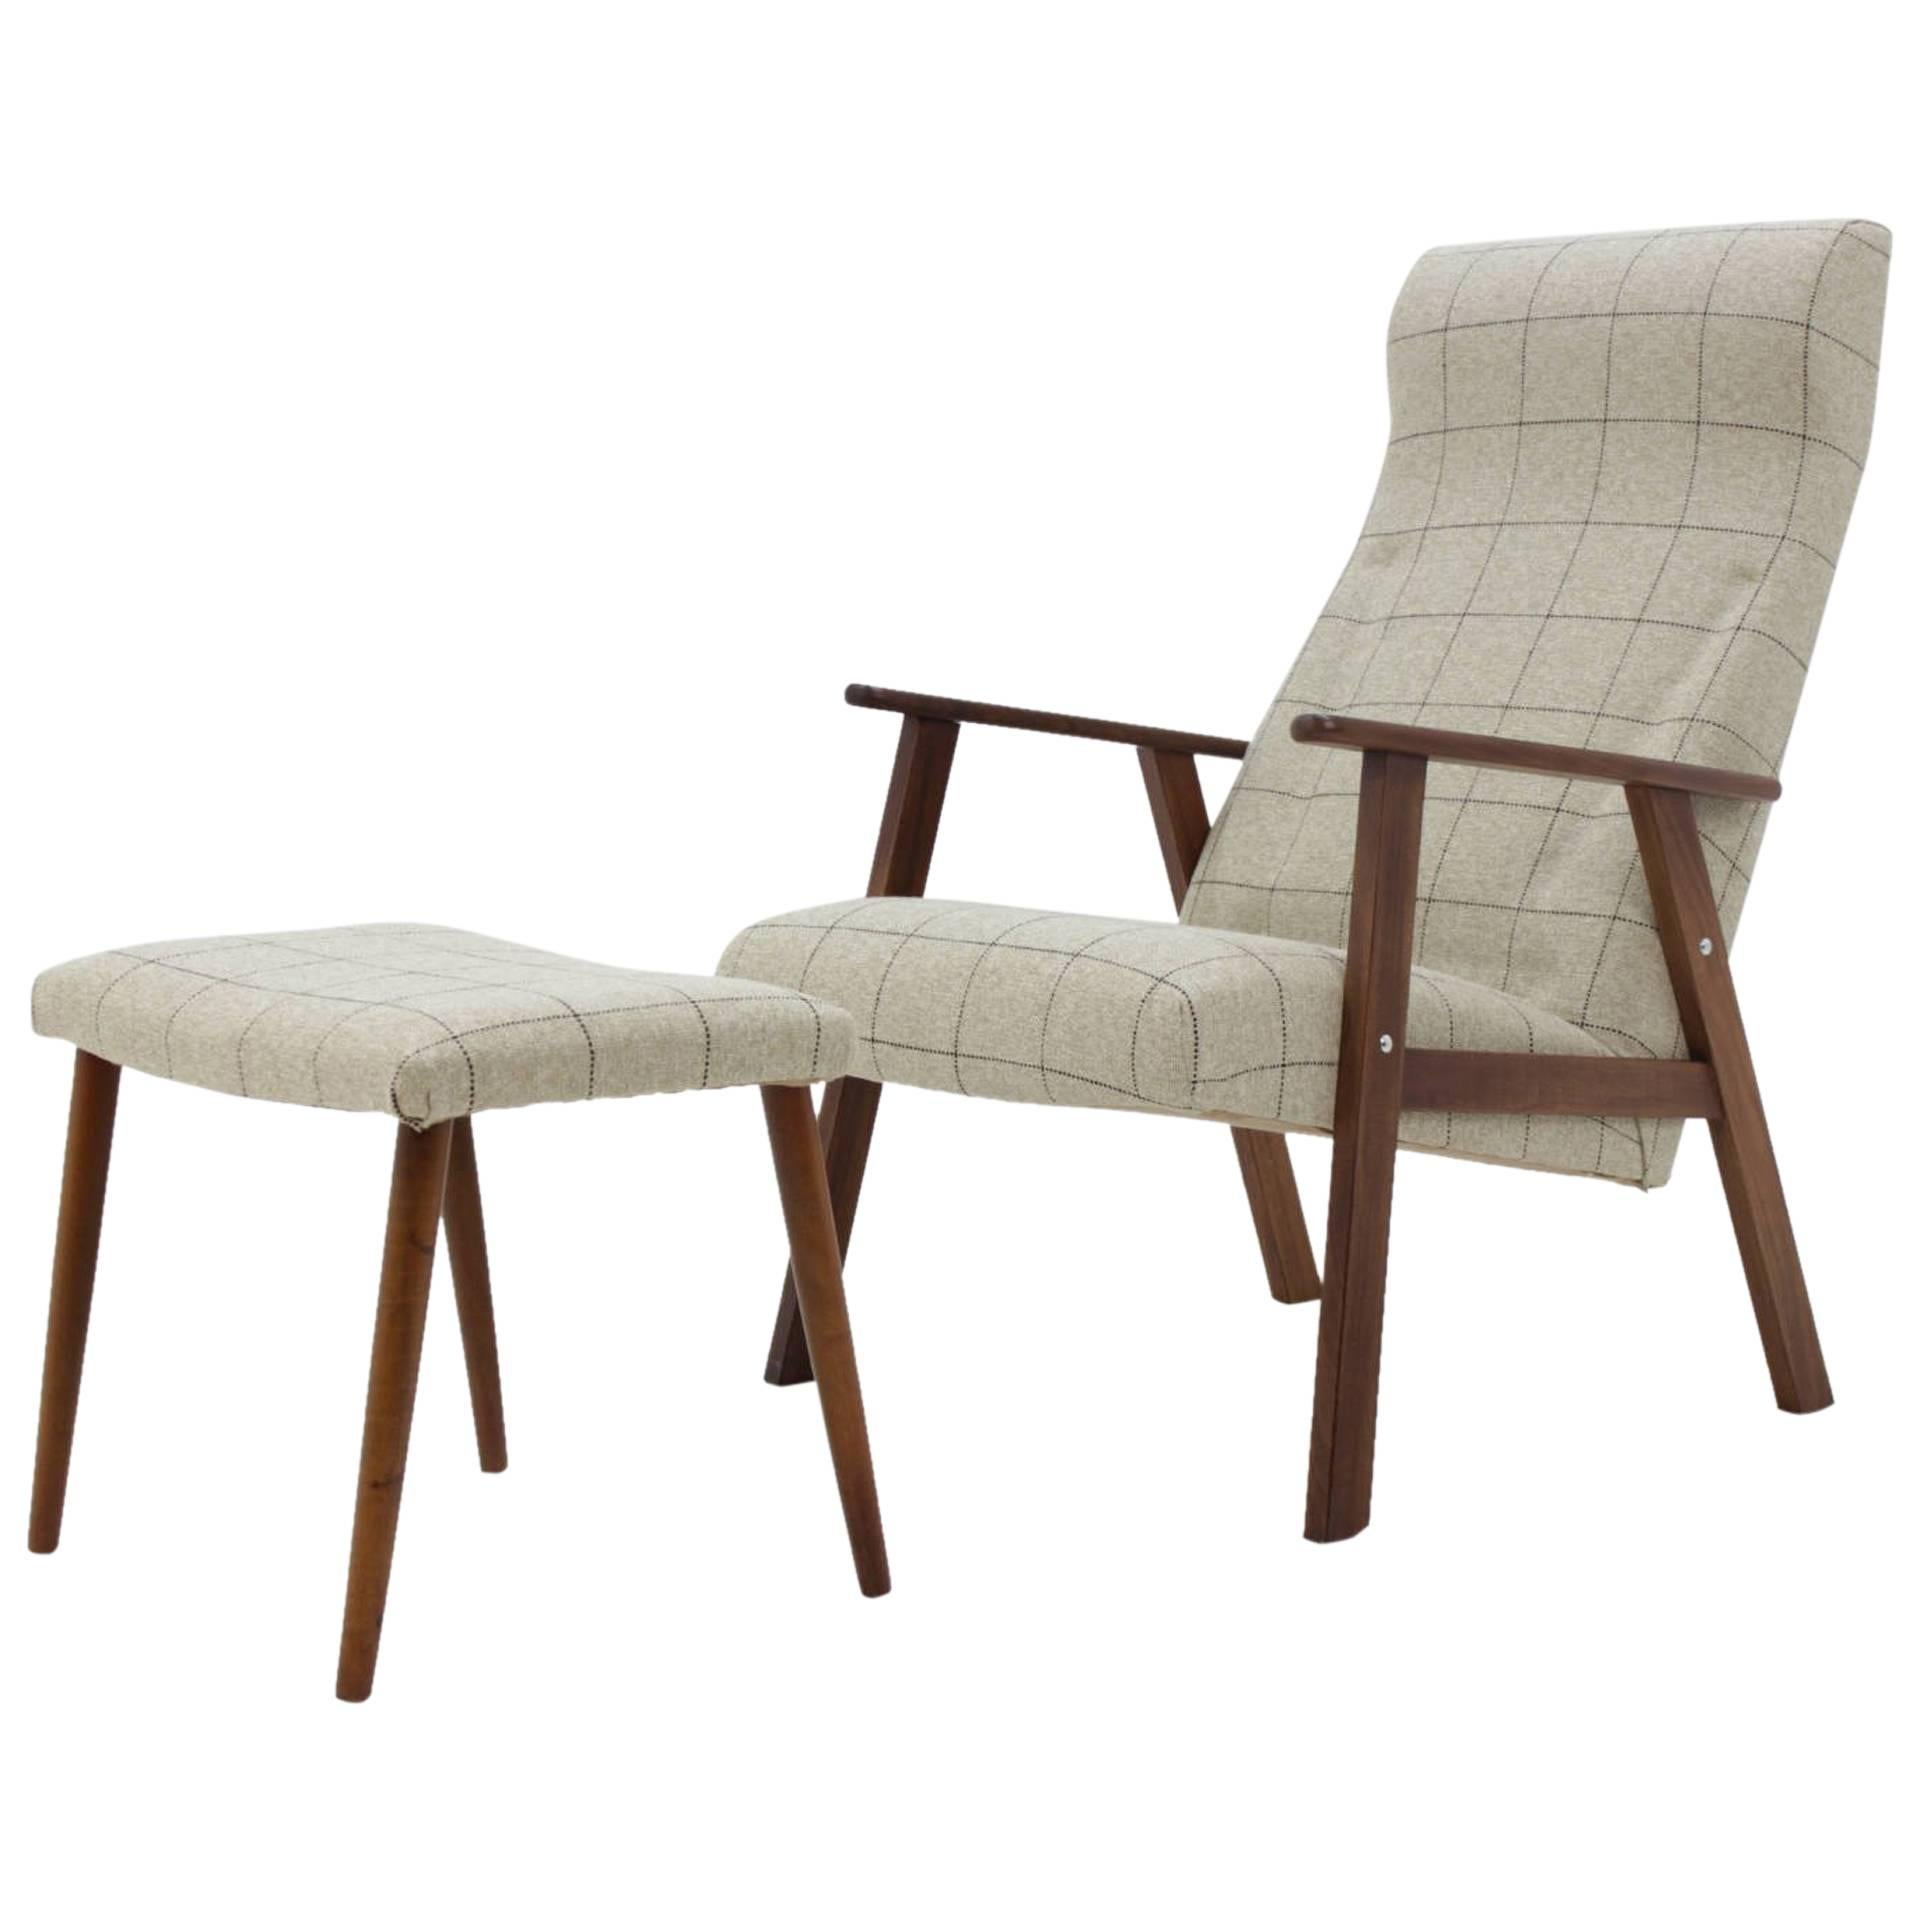 1960s Danish Teak Lounge Chair with Stool